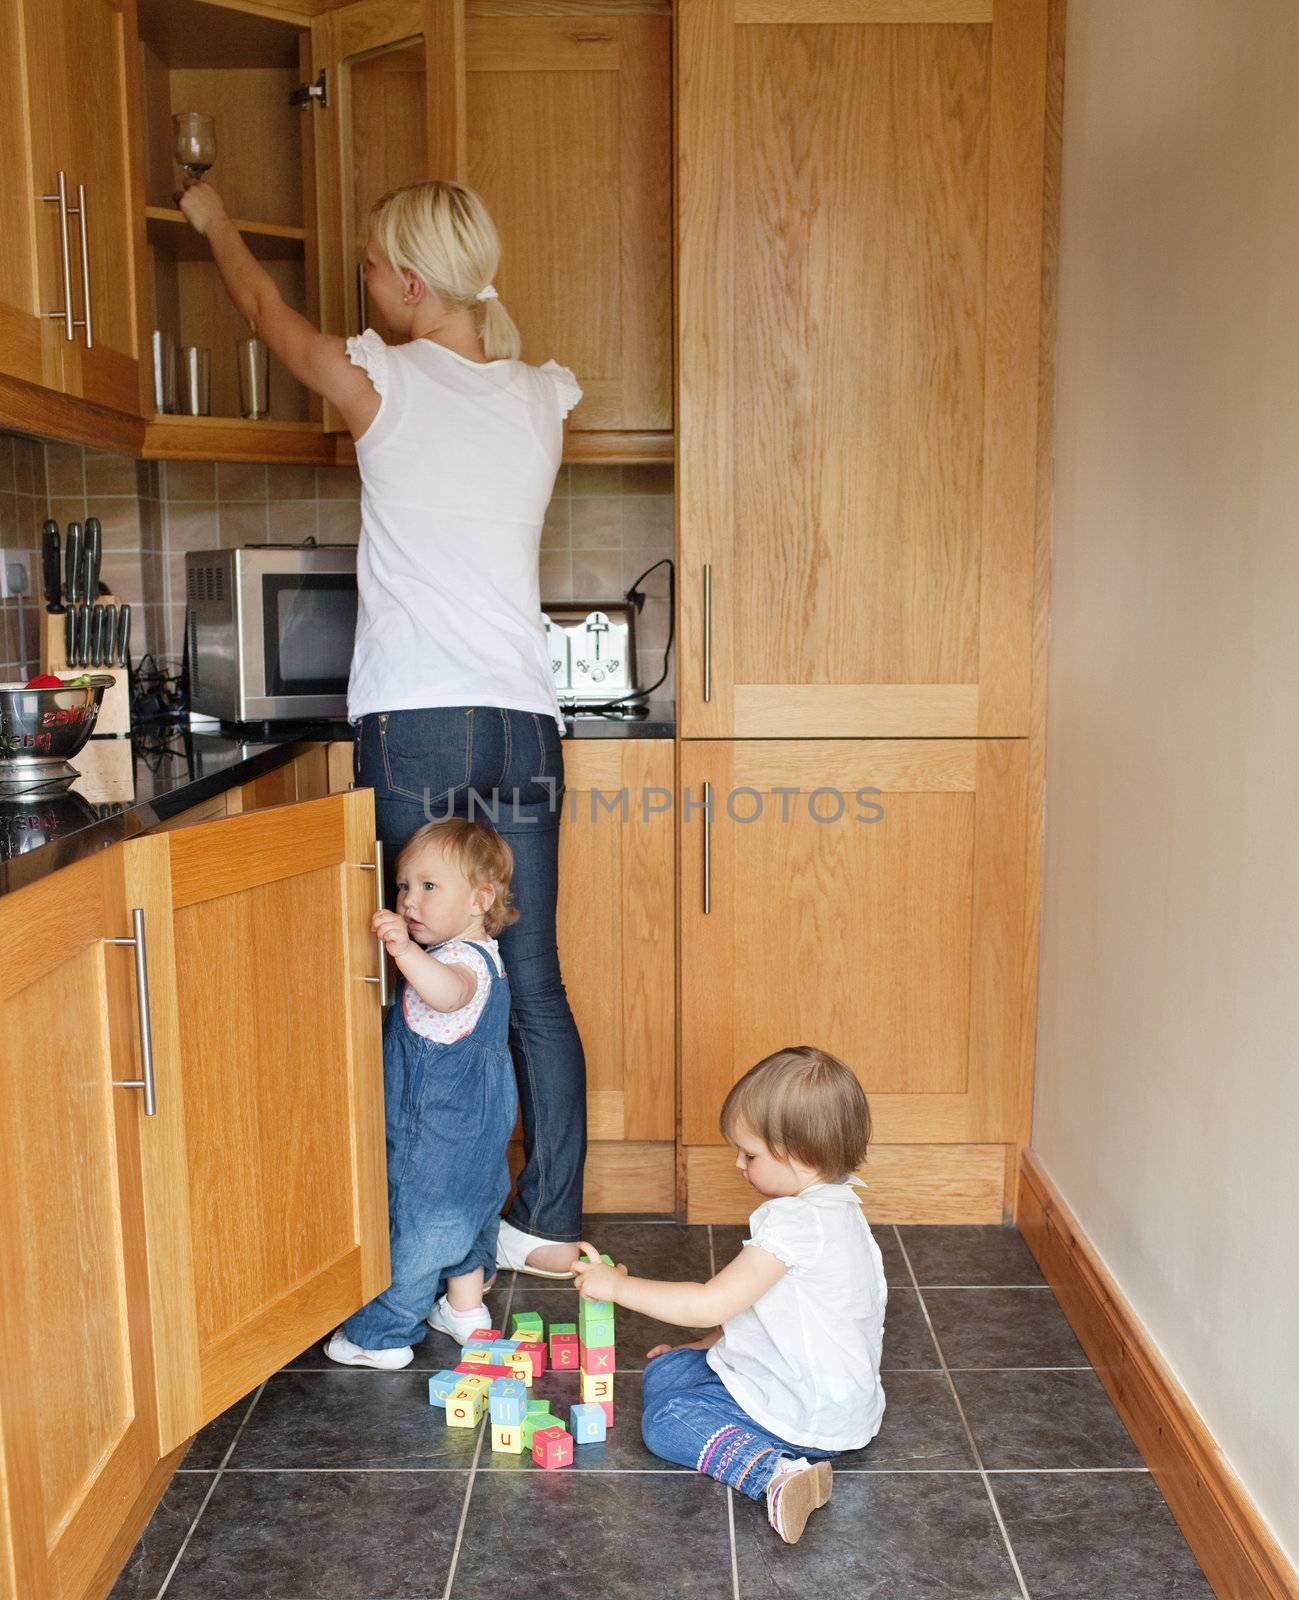 Family in the kitchen by Wavebreakmedia